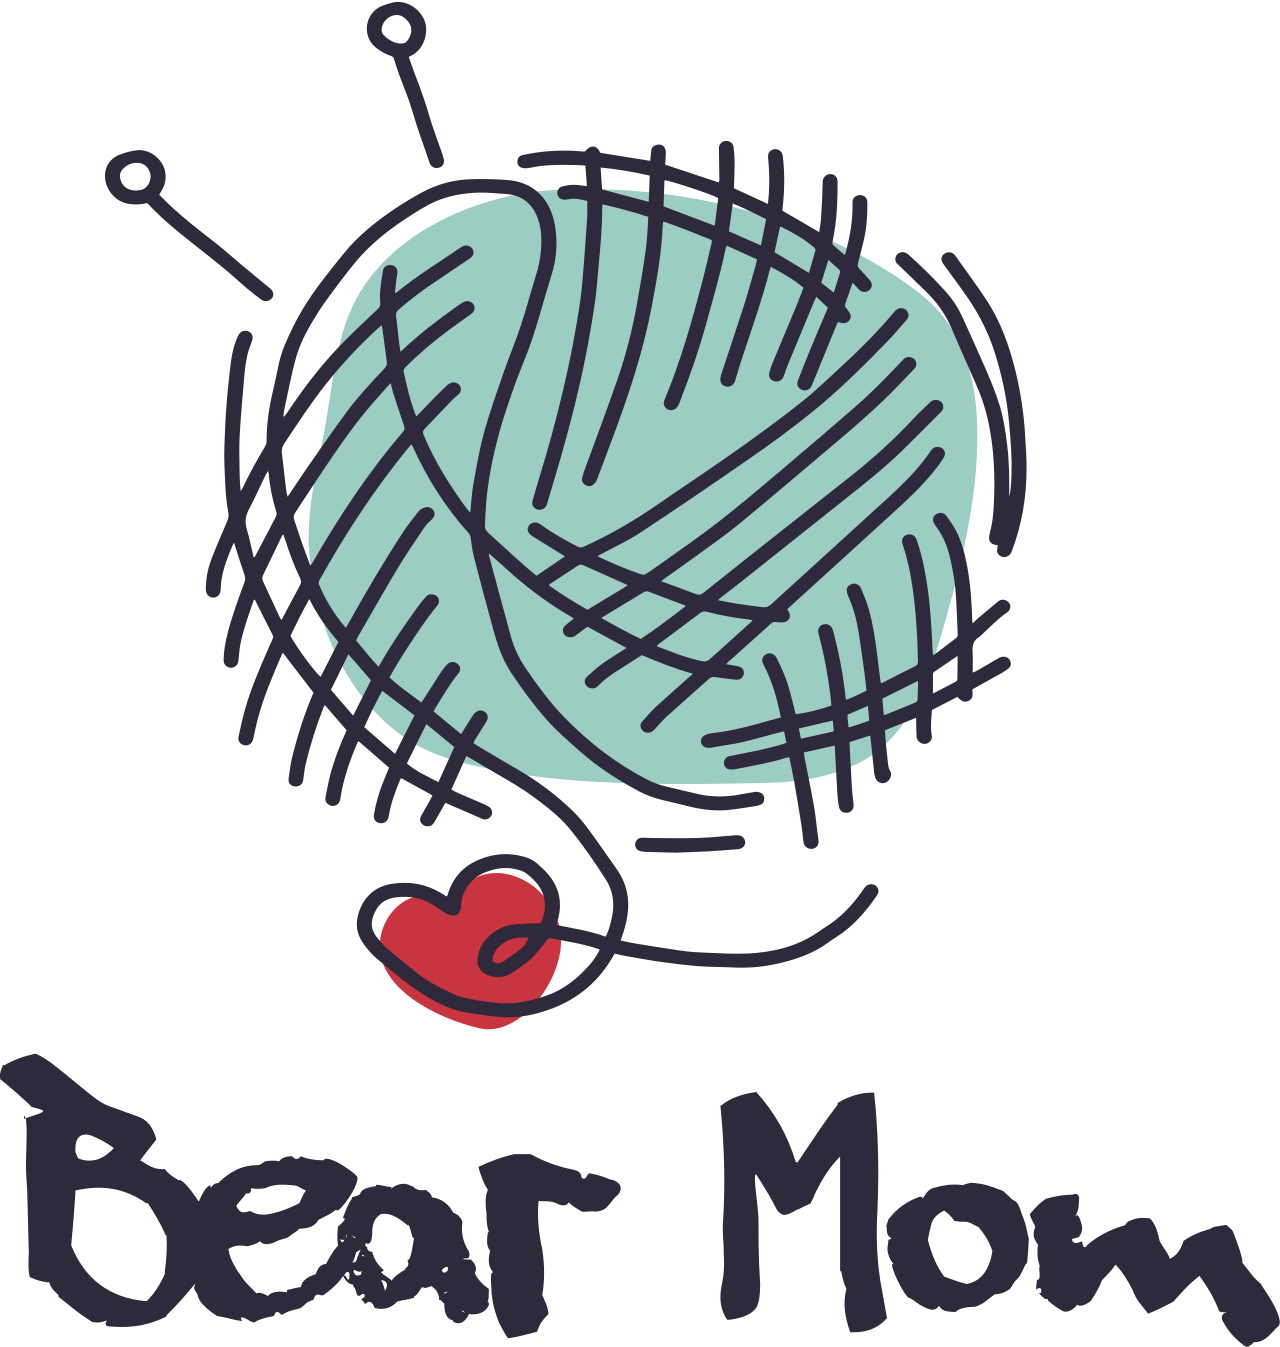 Bear Mom's web page